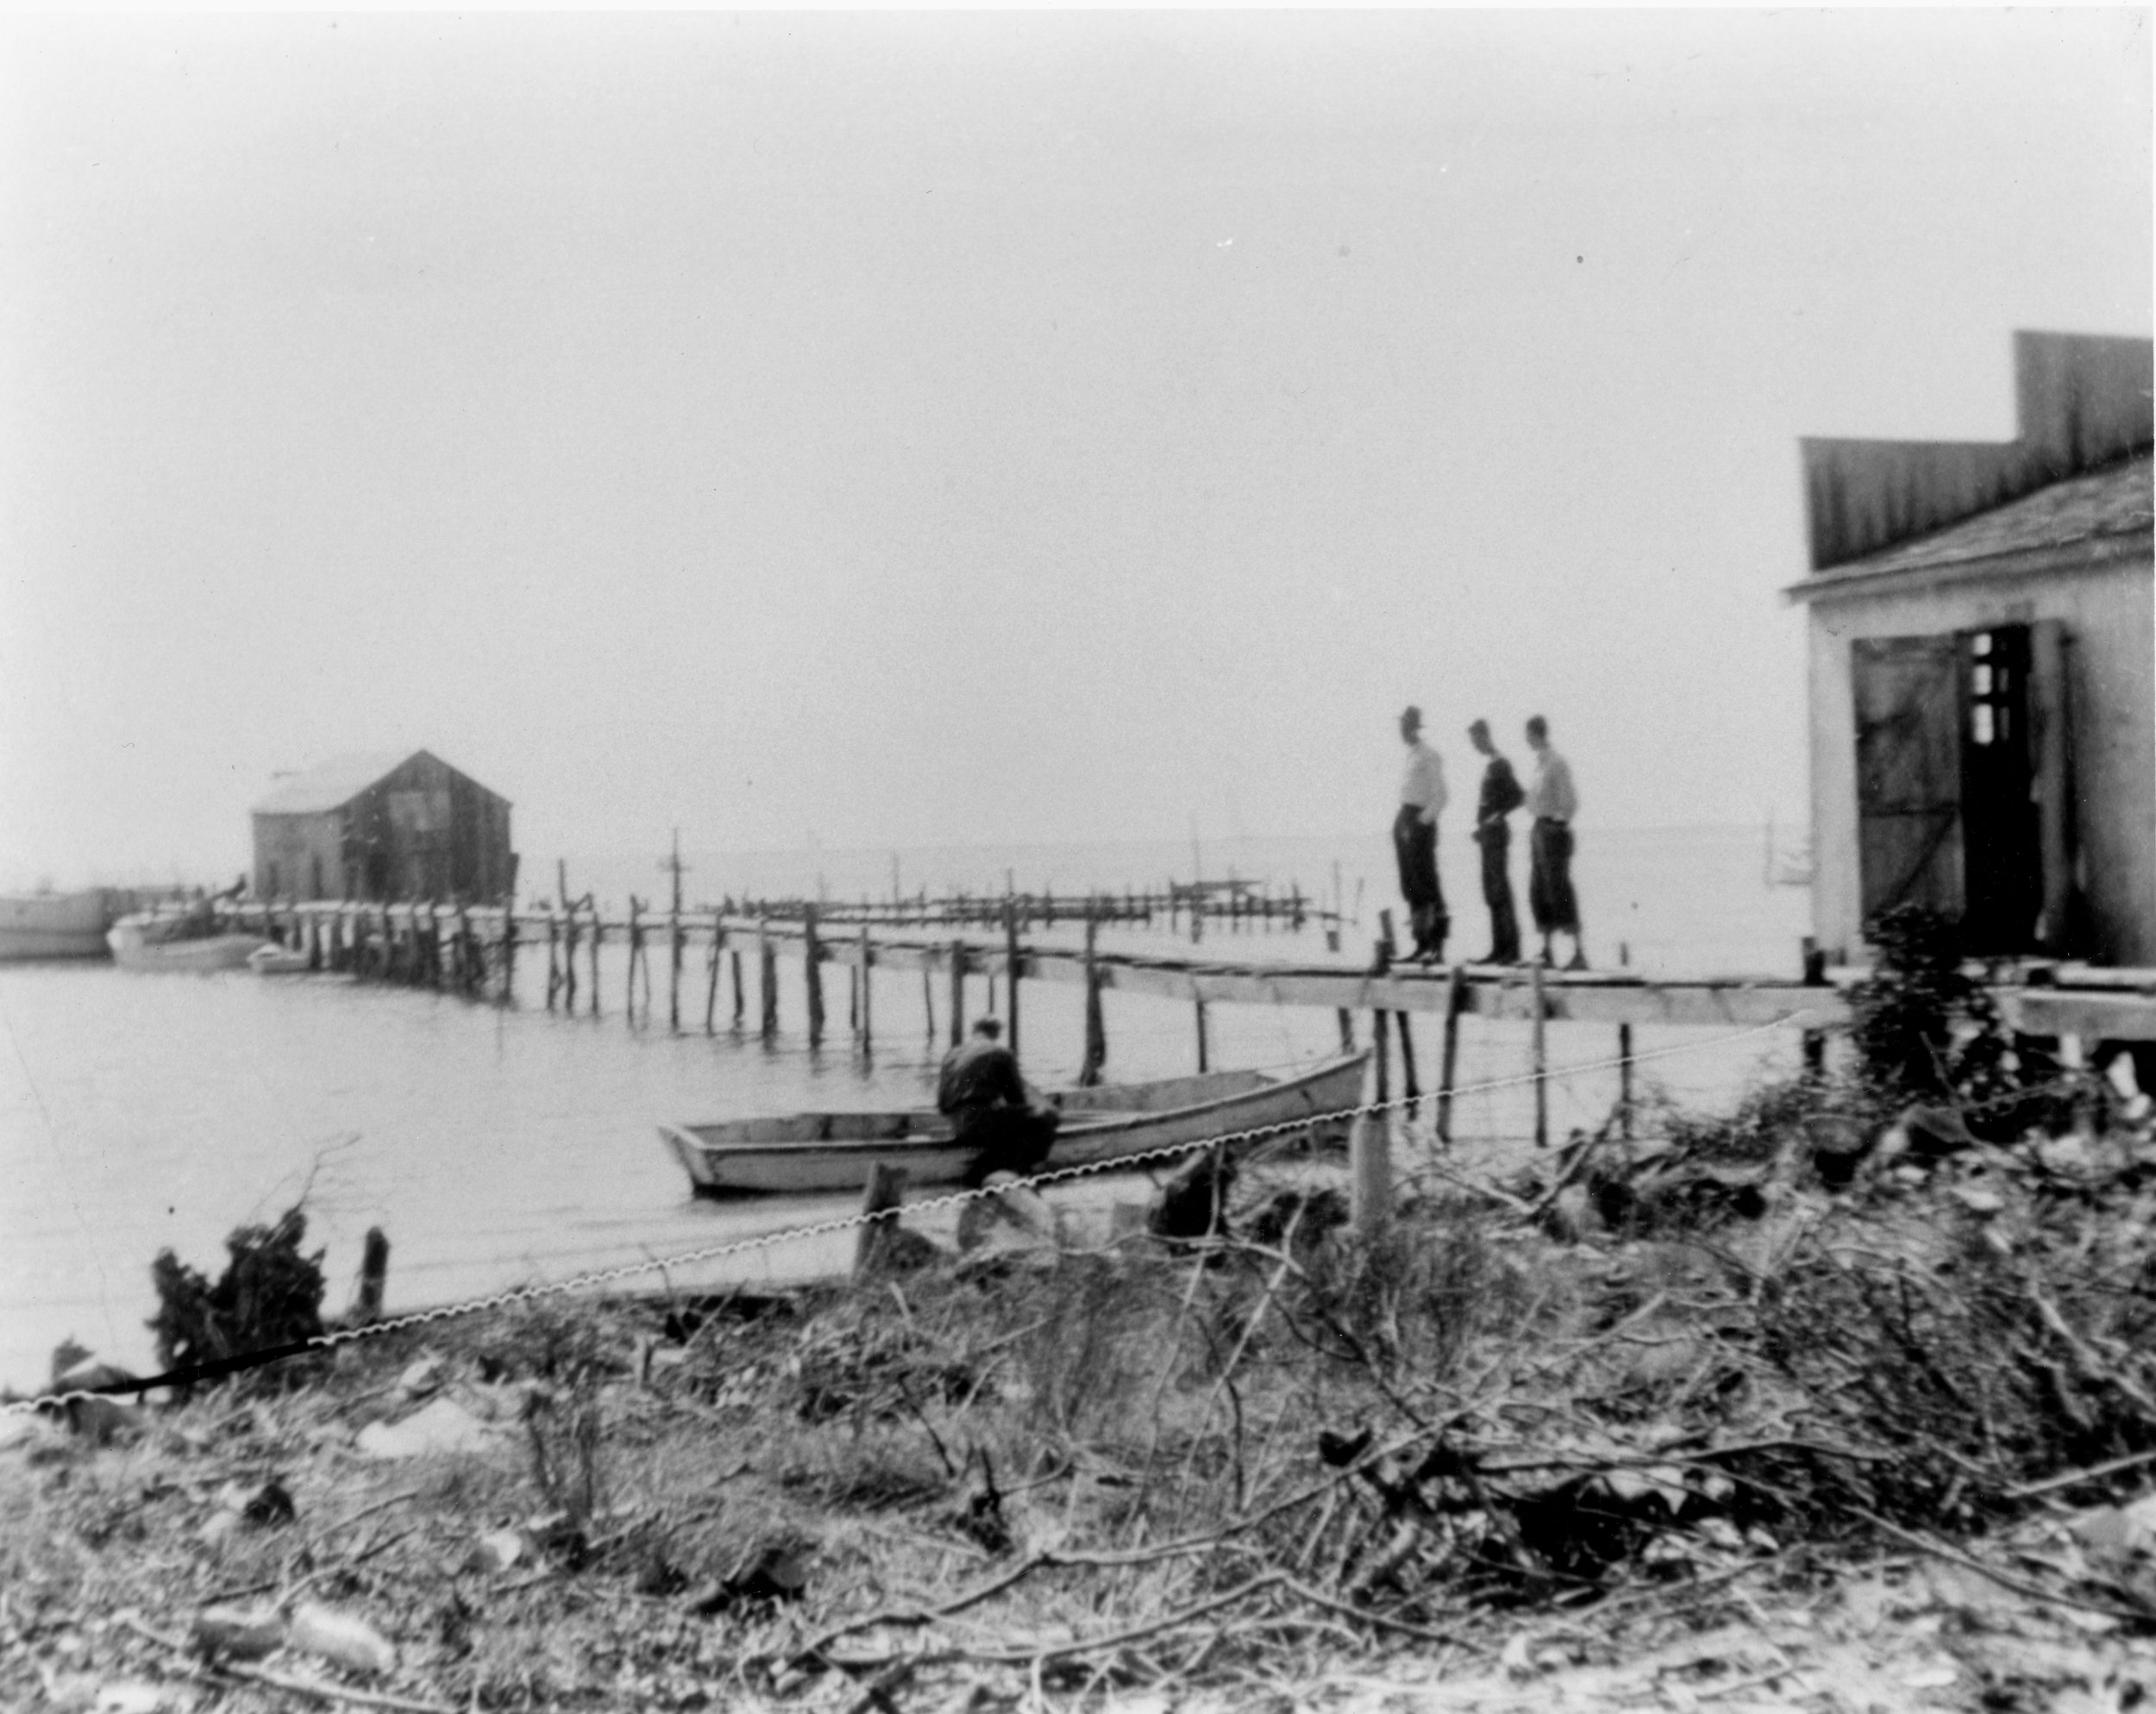 Harkers Island fishermen gather on the dock at Henry Davis' 